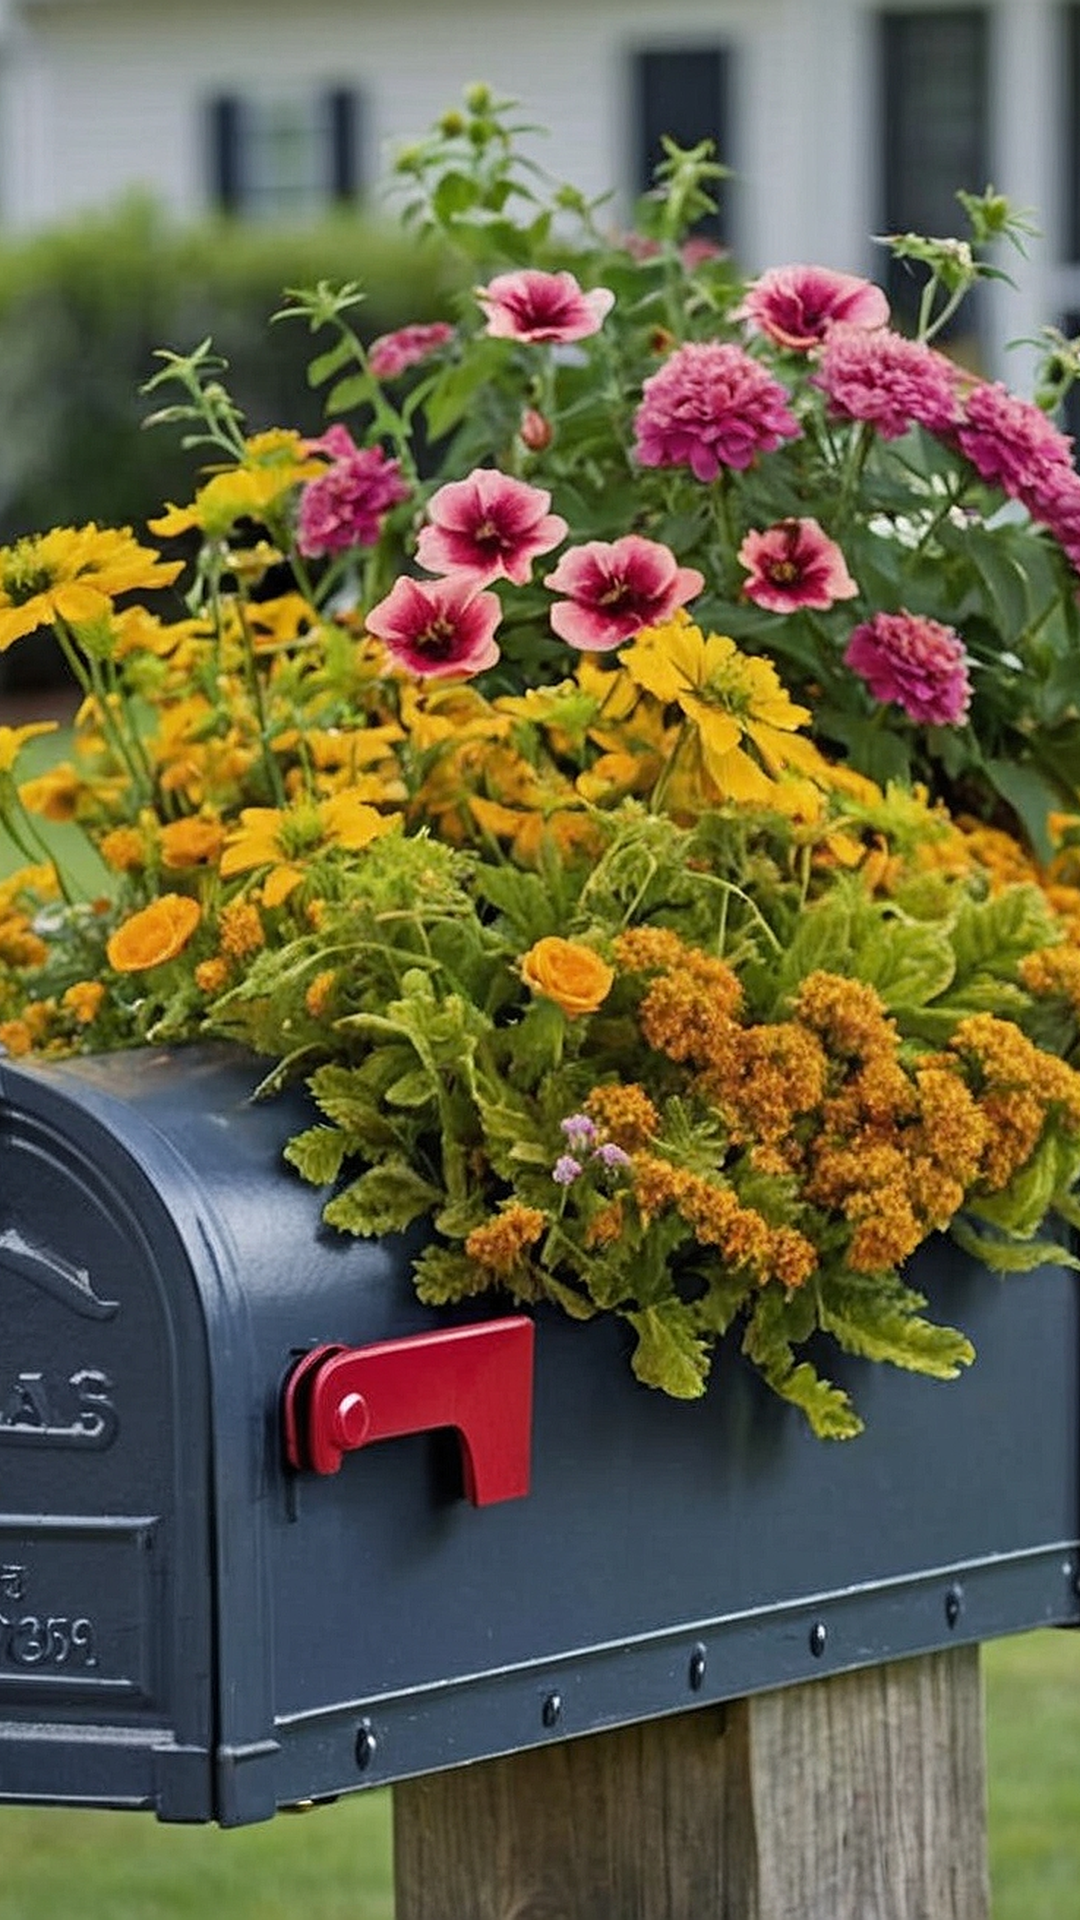 Enchanted Mailbox Gardens: Dreamy Floral Displays